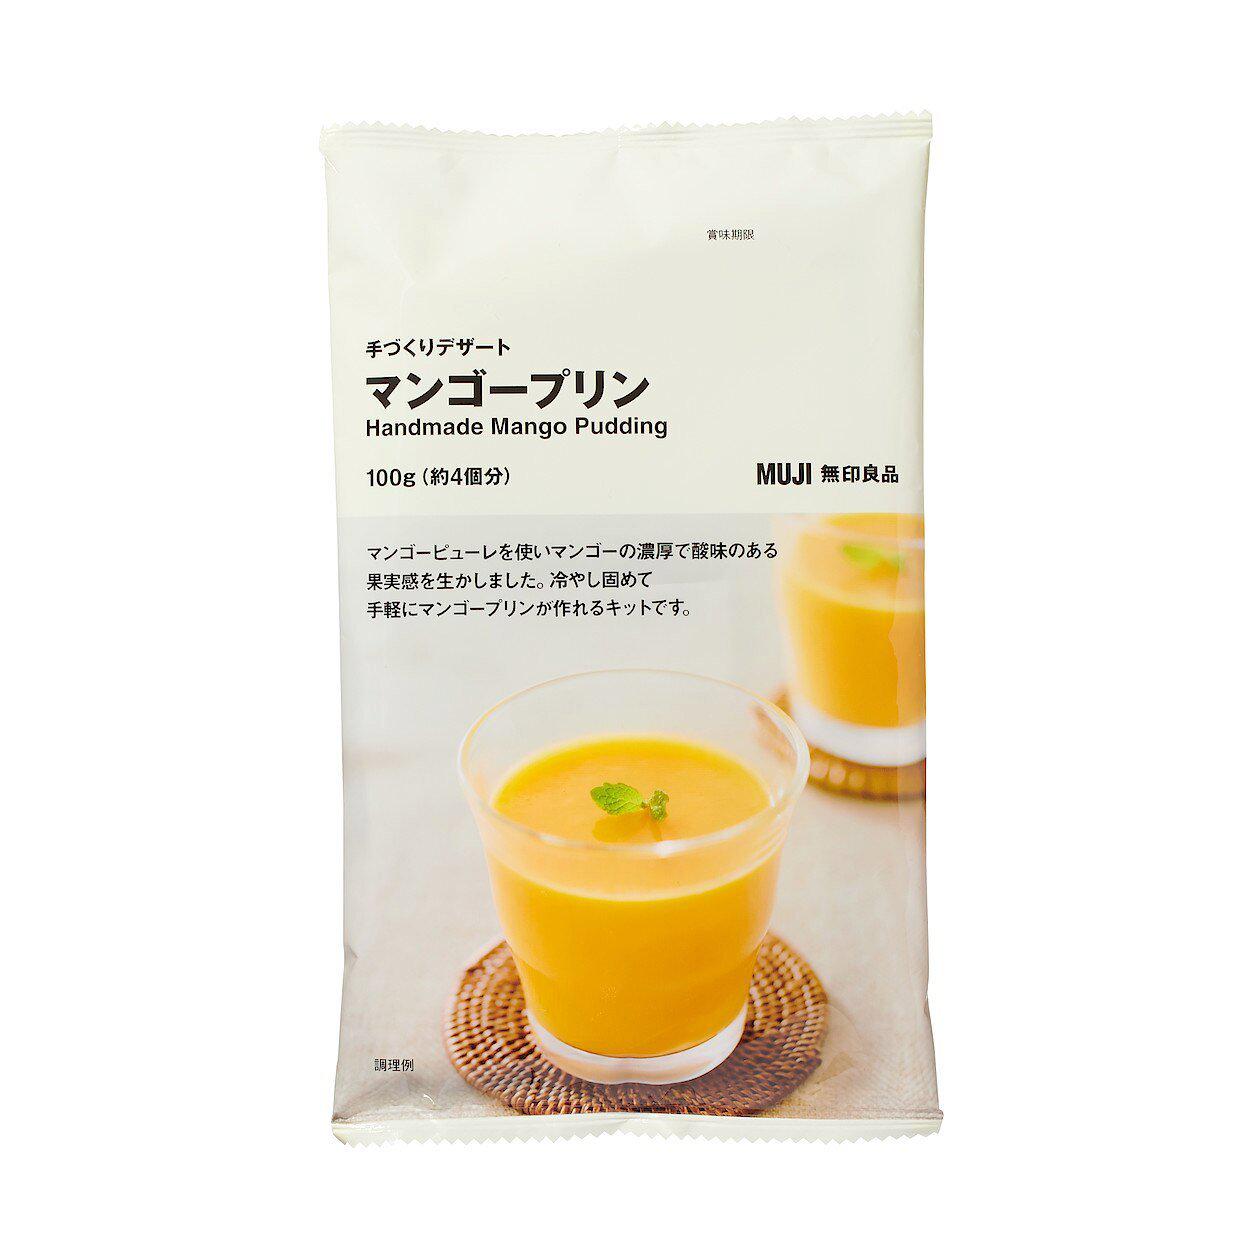 P-1-MHN-PUD-HO-4-Muji Instant Handmade Mango Pudding Mix 100g.jpg